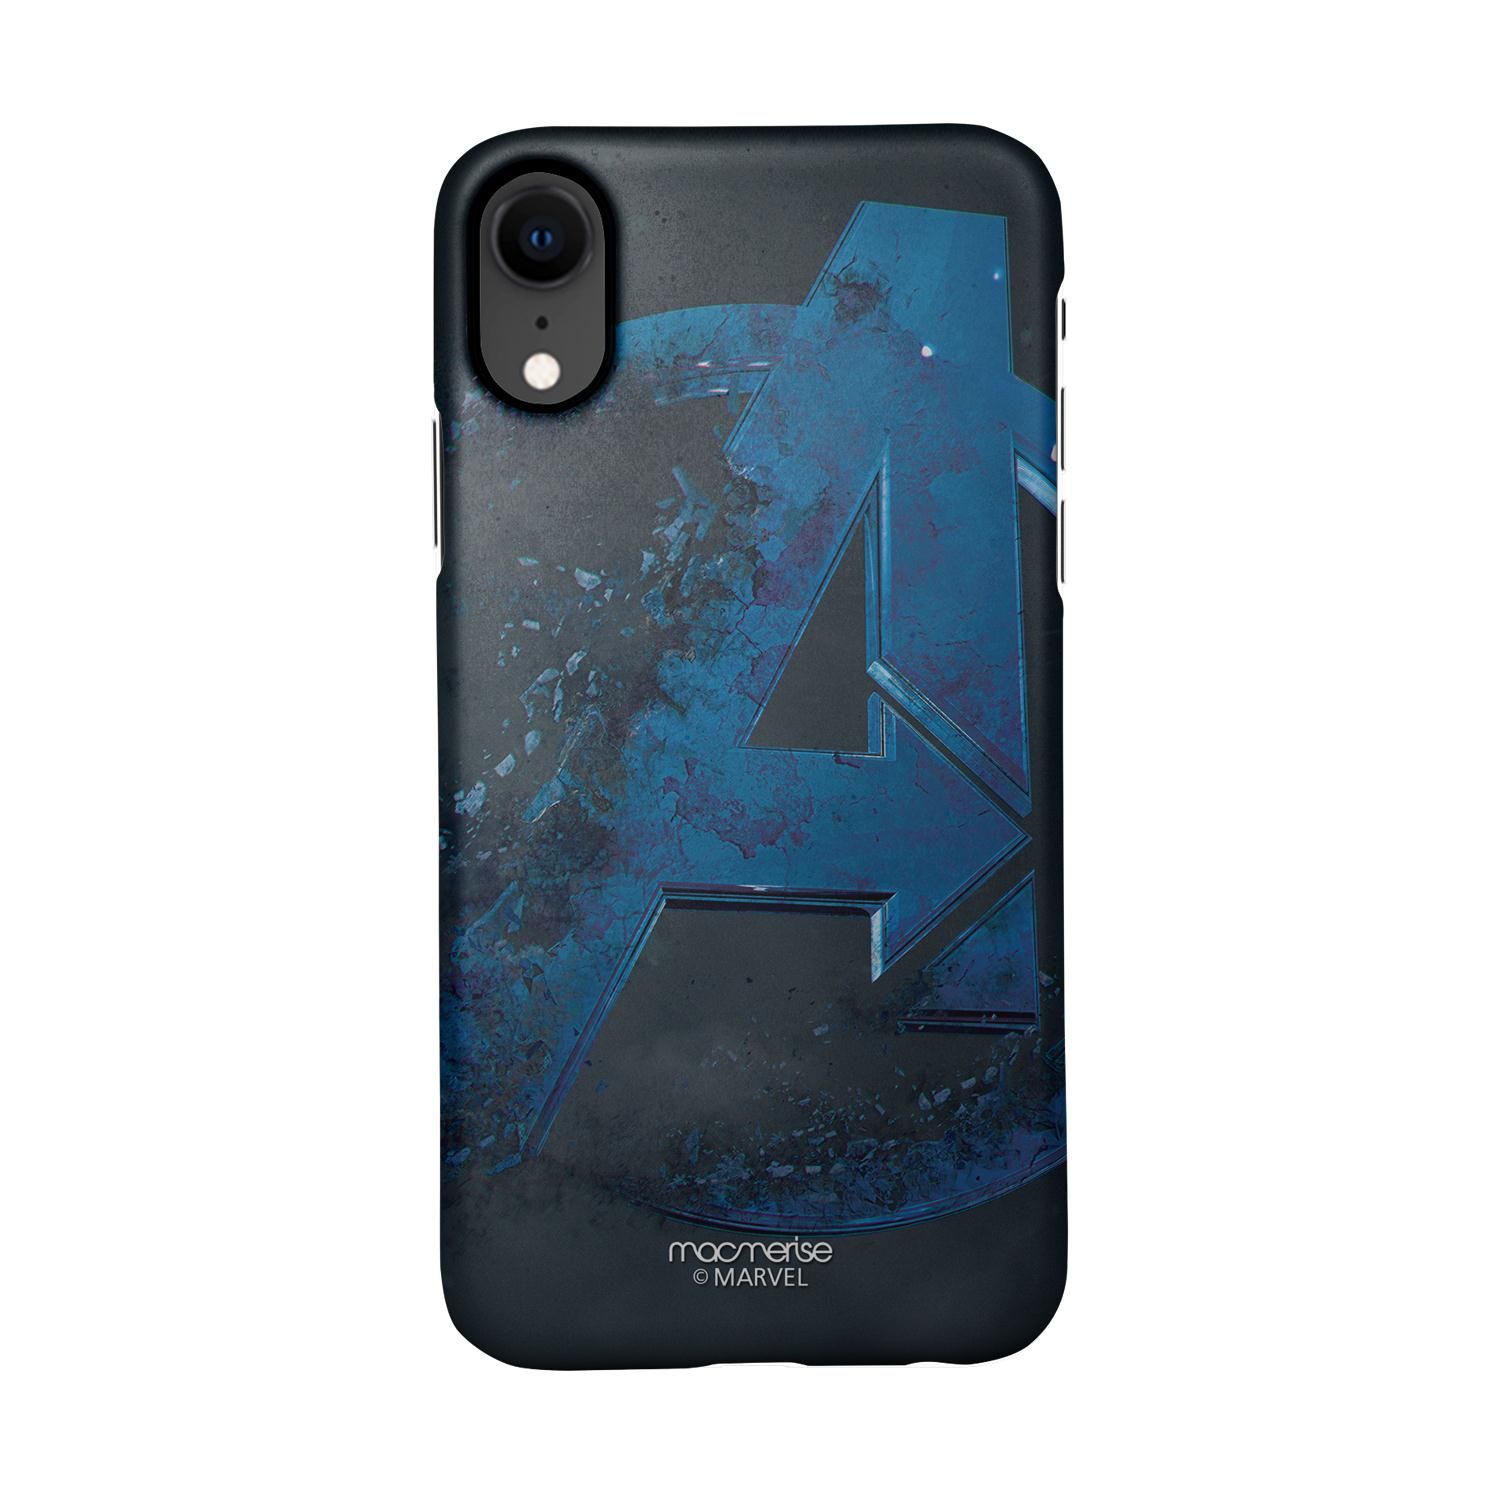 Buy Endgame Logo Teal - Sleek Phone Case for iPhone XR Online